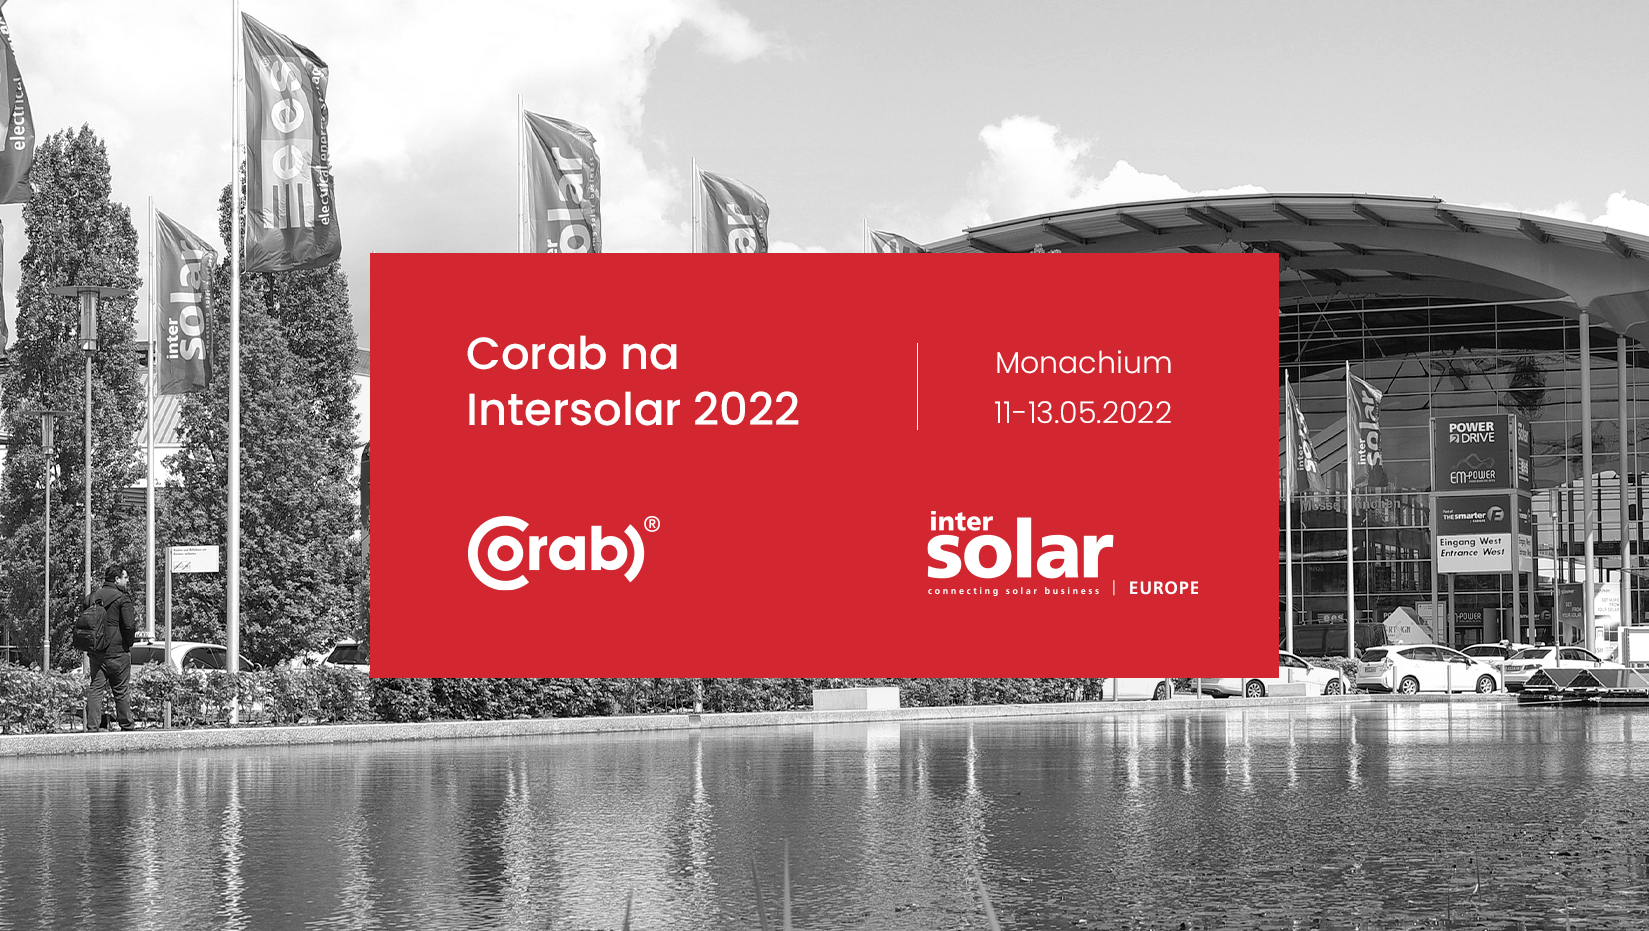 Corab na targach Intersolar 2022